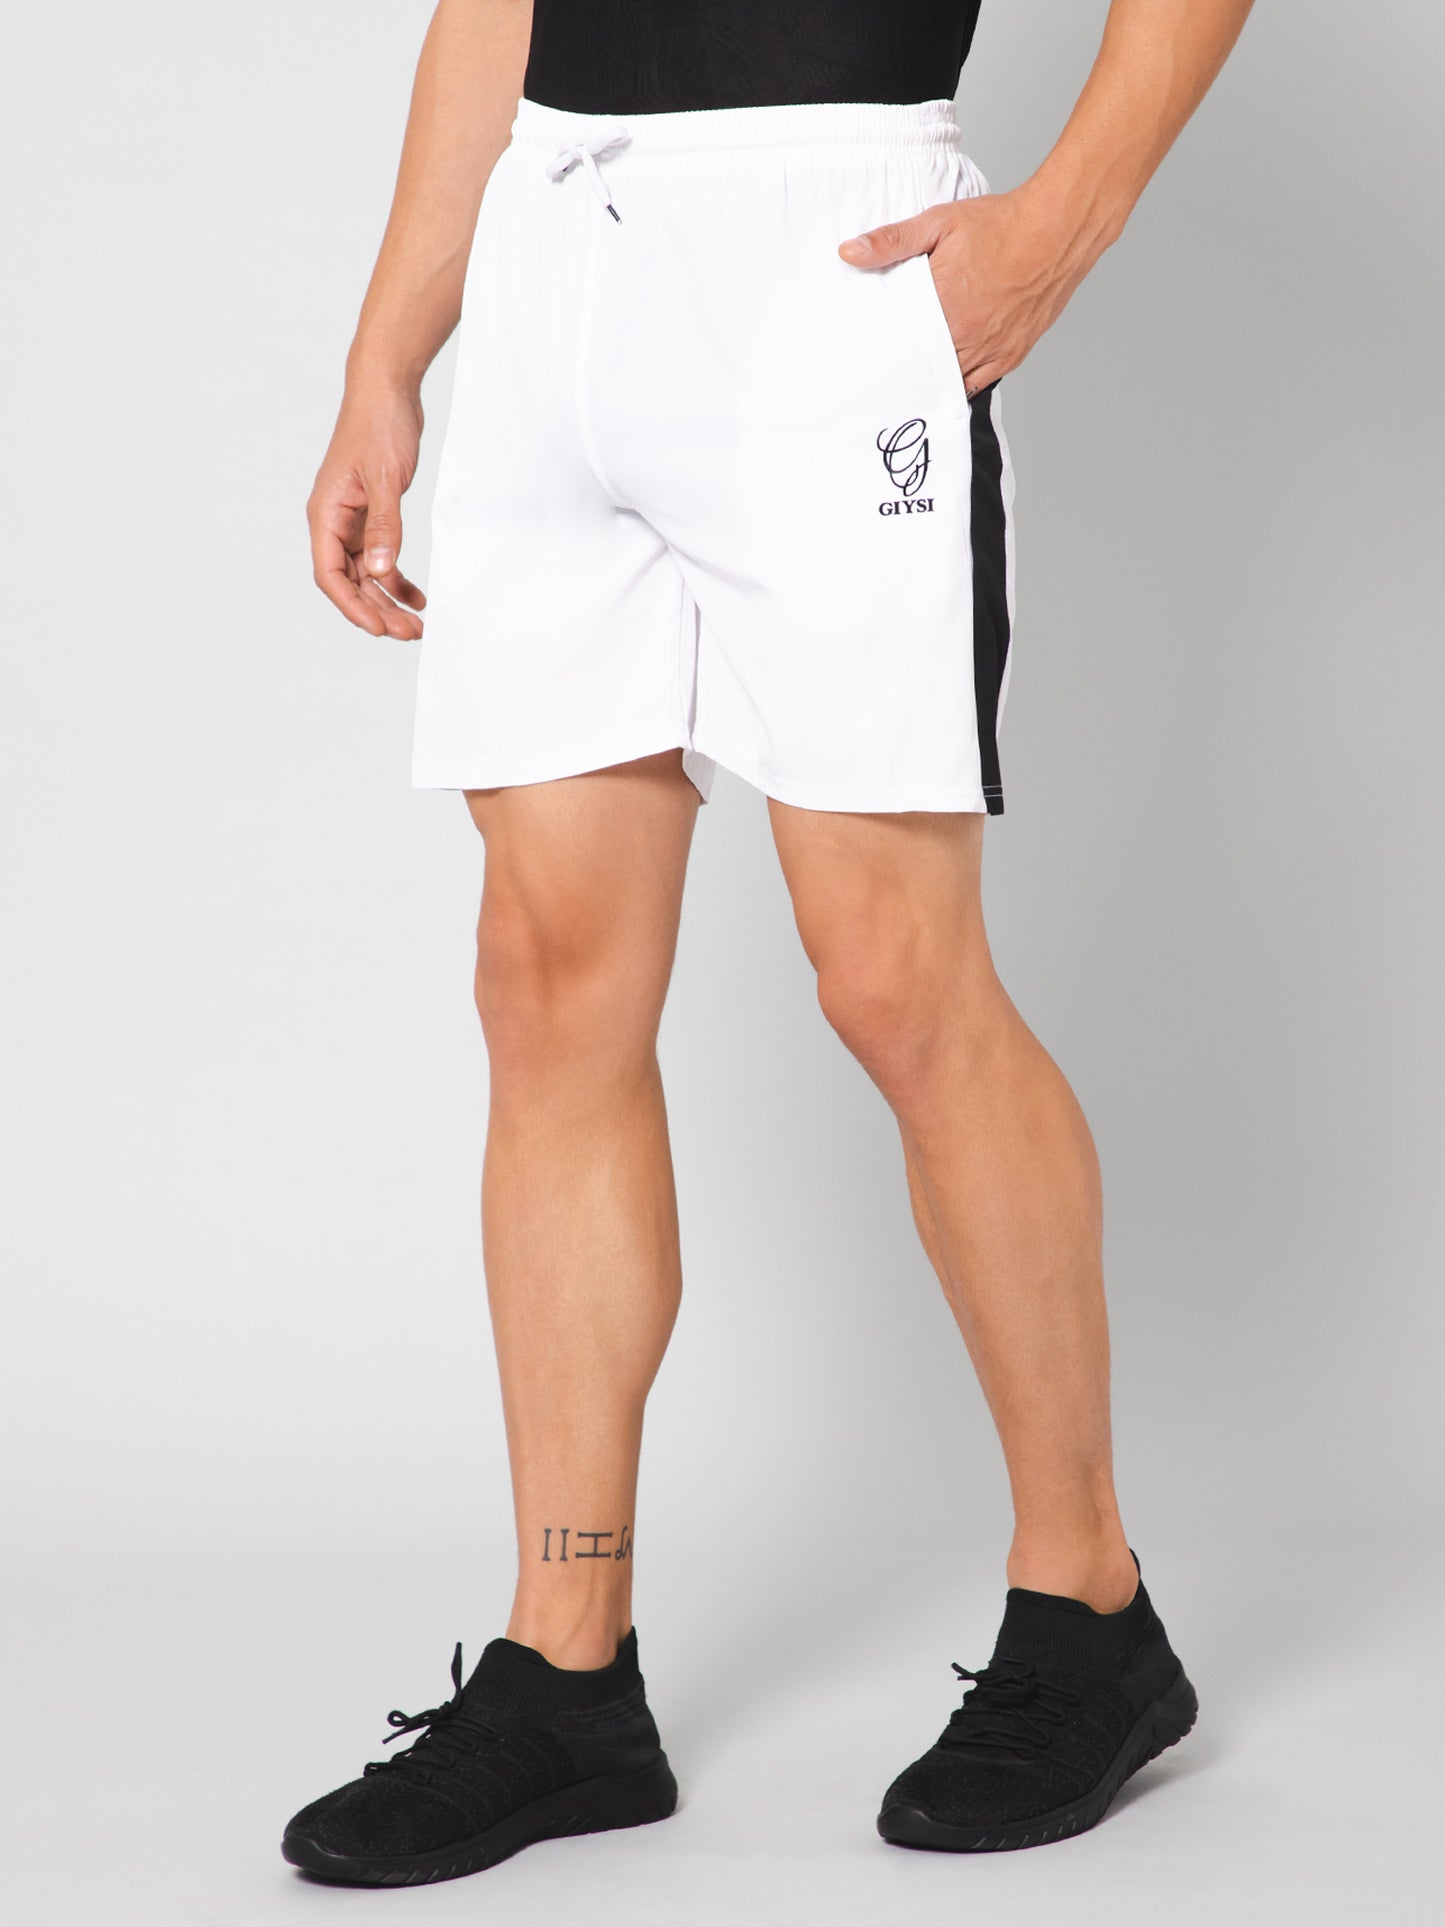 White Shorts with Black Stripes